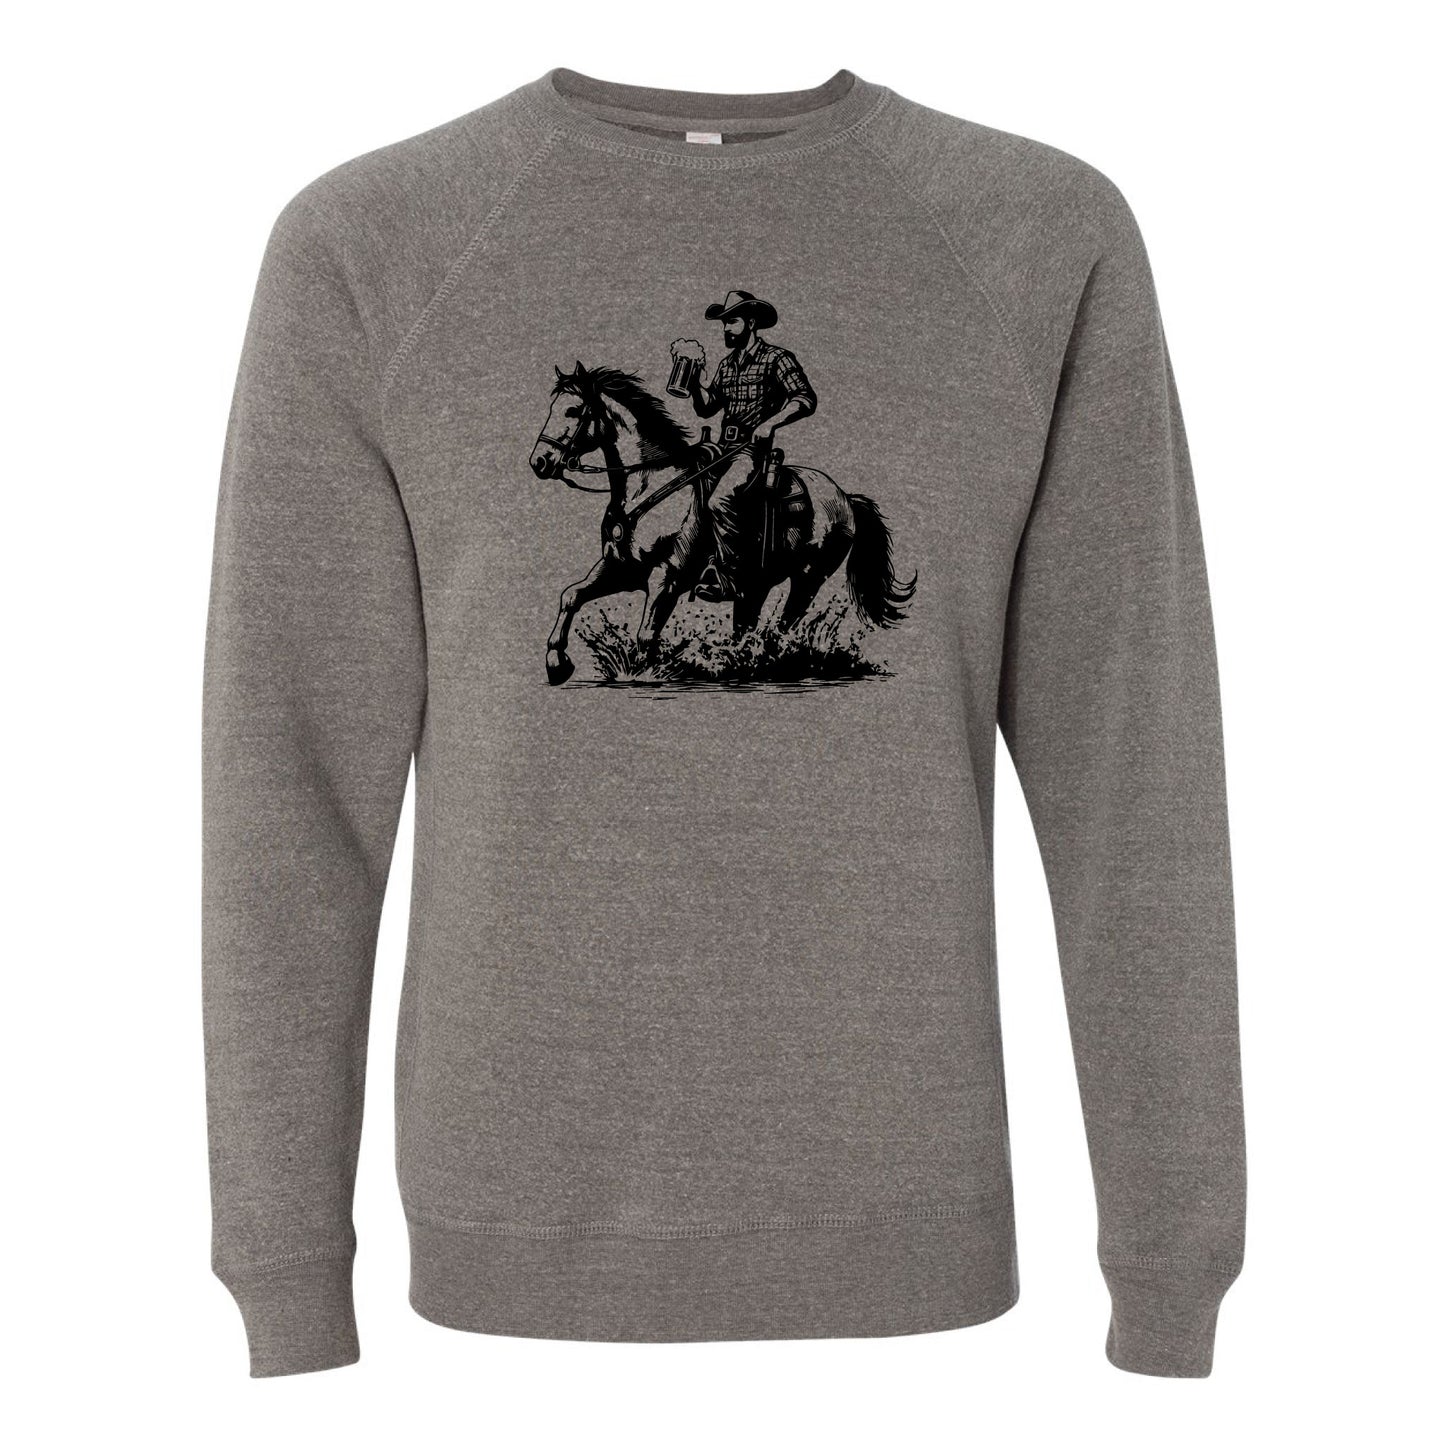 Cowboy Horse Beer Crewneck Sweatshirt